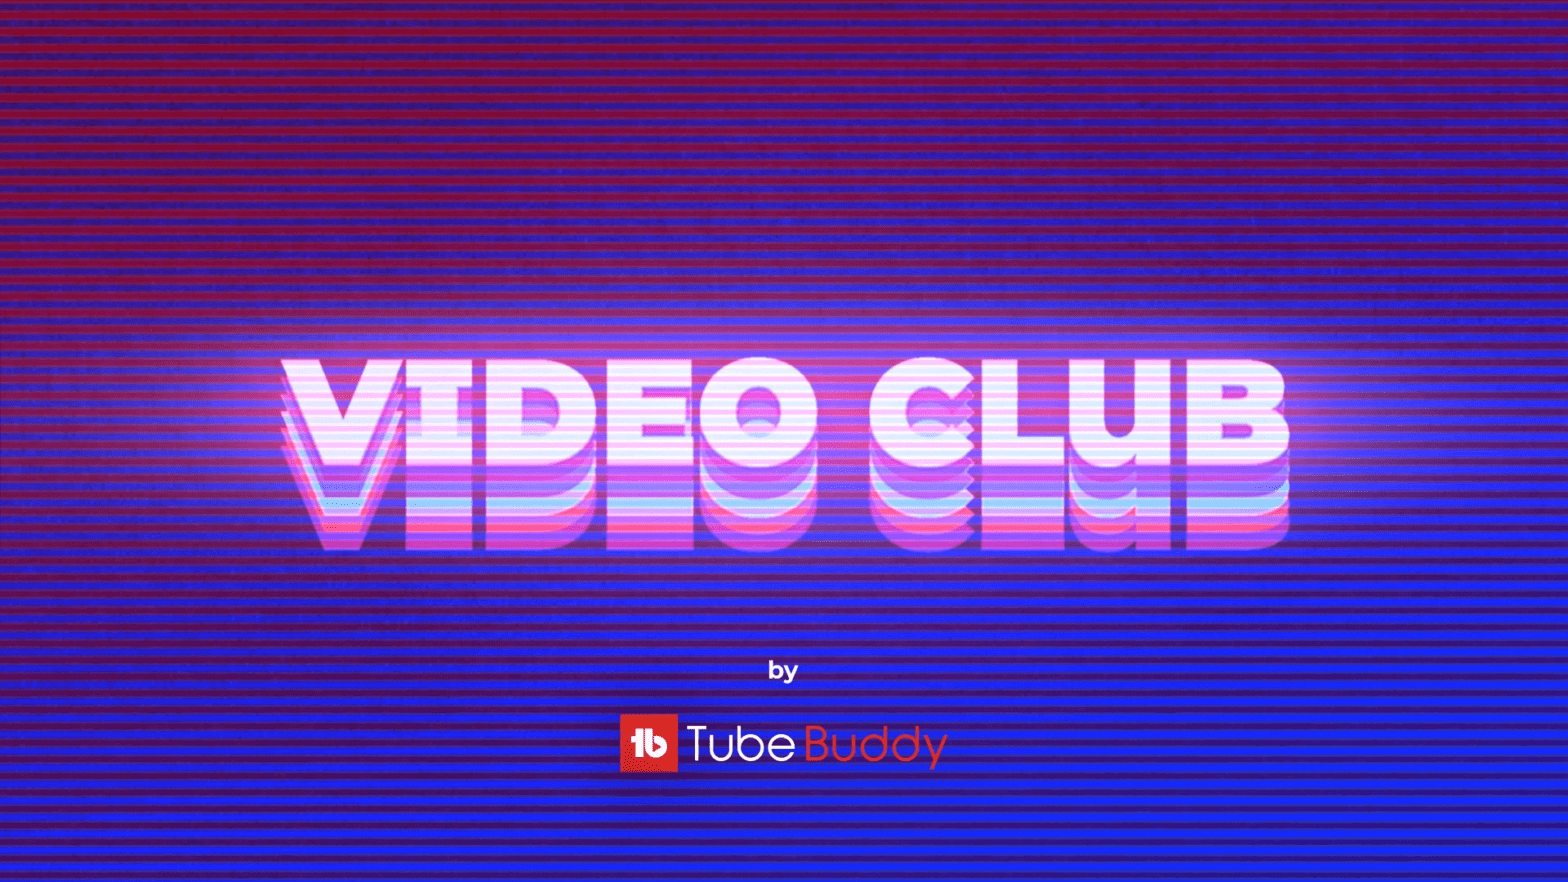 YouTube Algorithm TubeBuddy Video Club